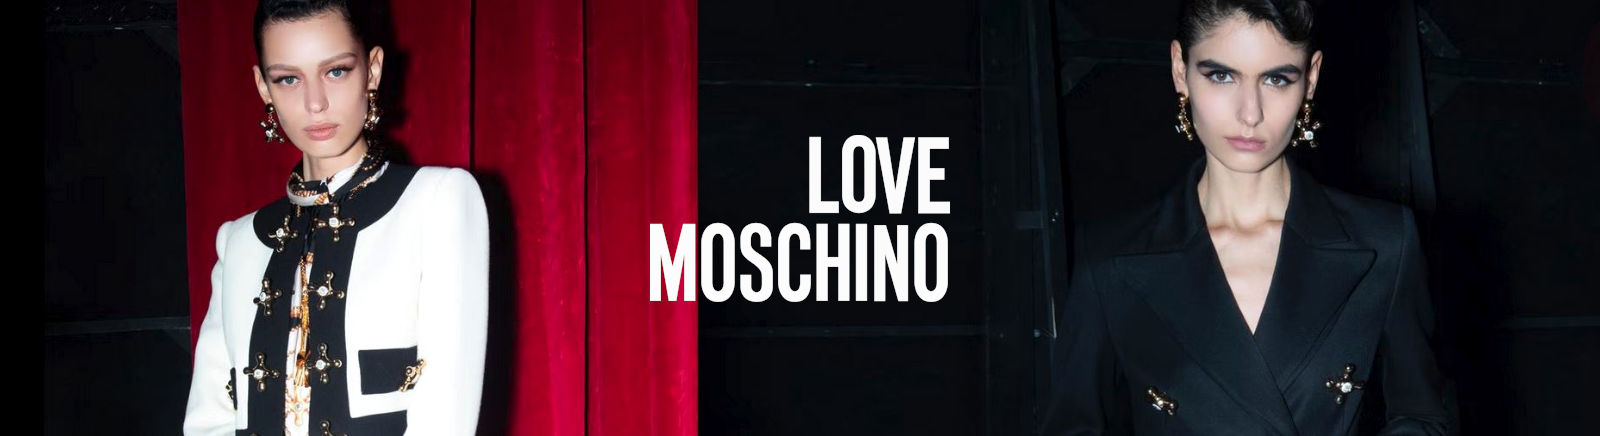 Love Moschino Markenschuhe online entdecken im Juppen Shop